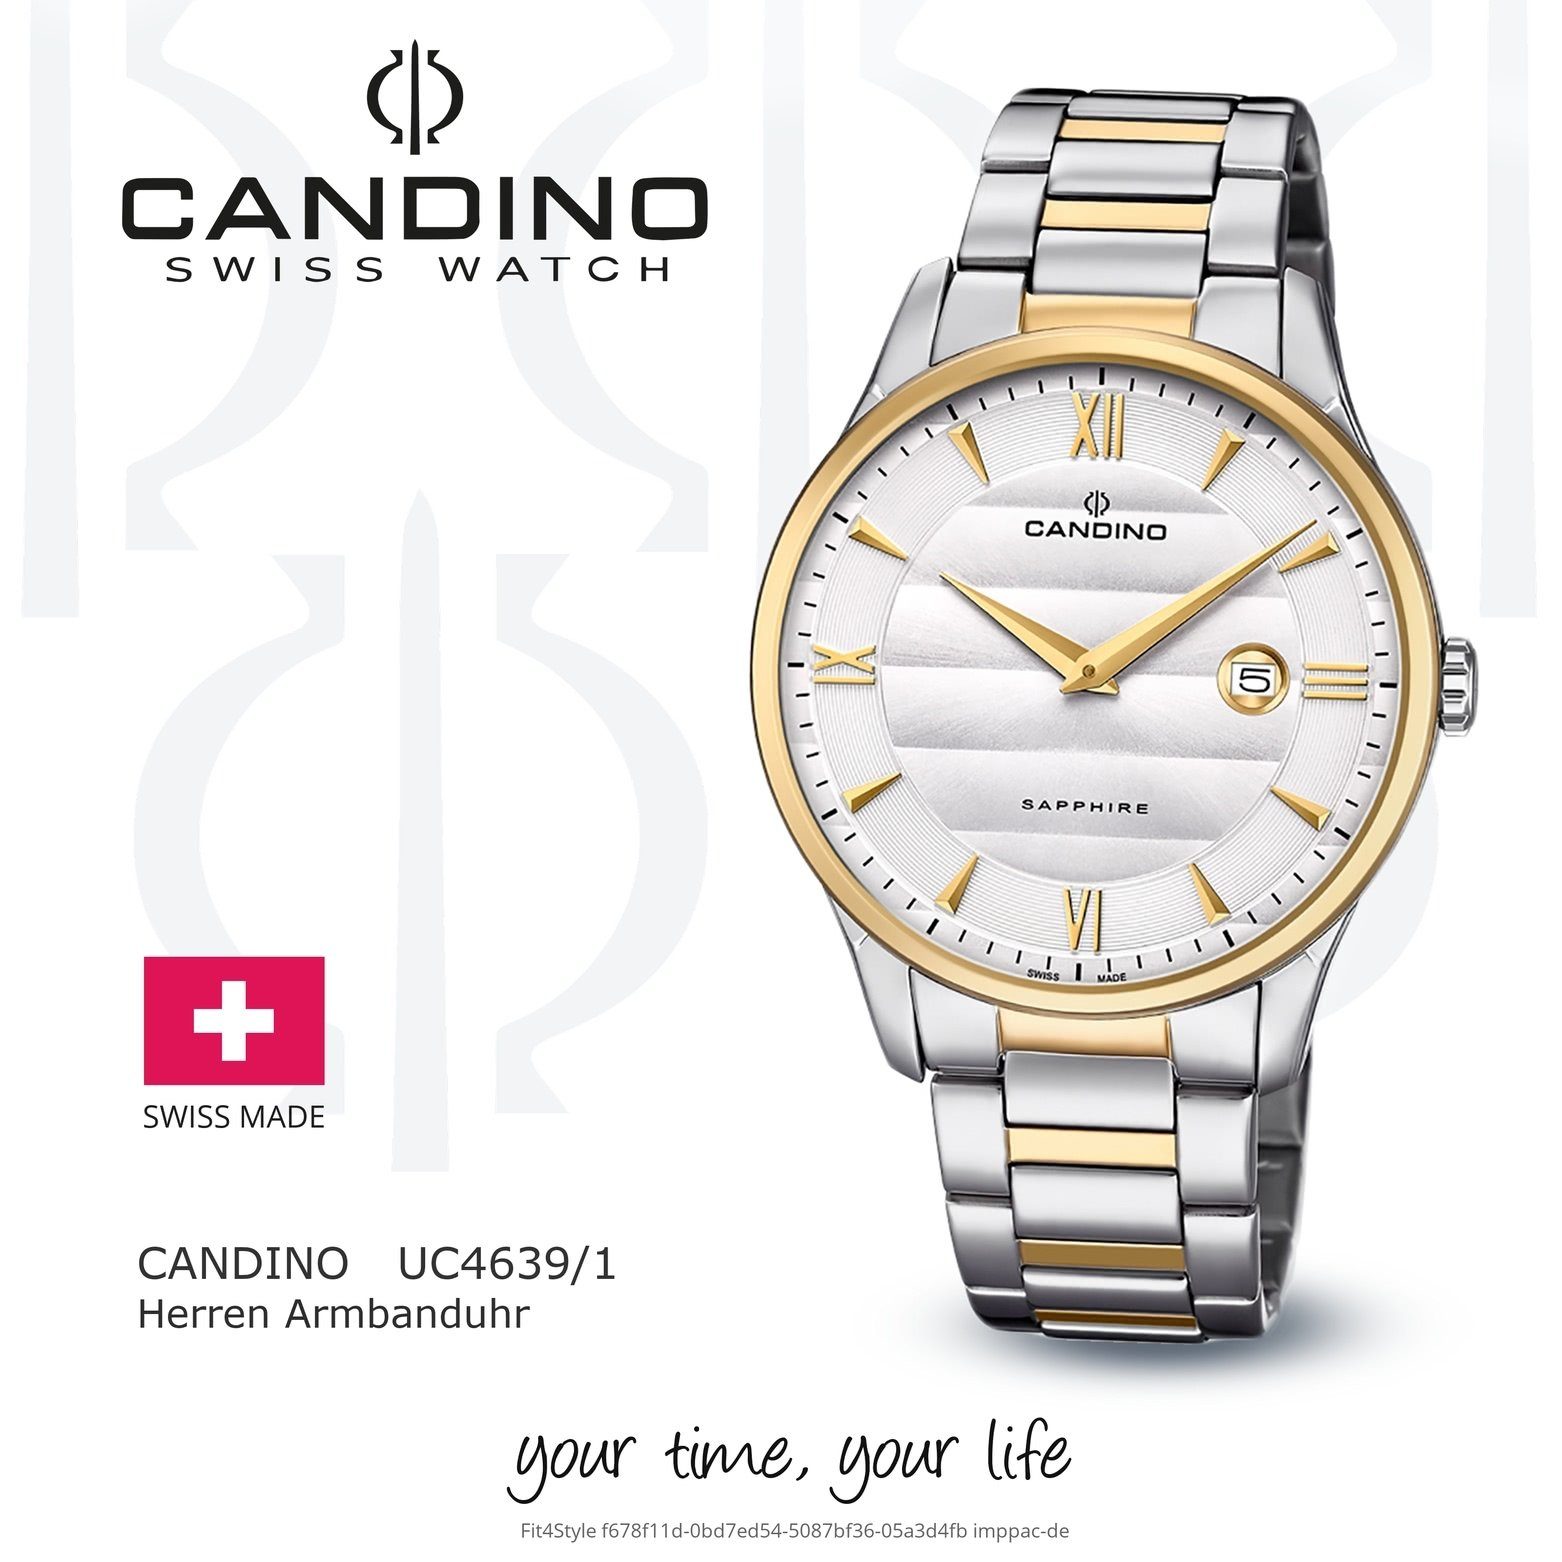 Candino Quarzuhr Candino Herren rund, gold, silber, C4639/1, Analog Armbanduhr Herren Elegant Uhr Edelstahlarmband